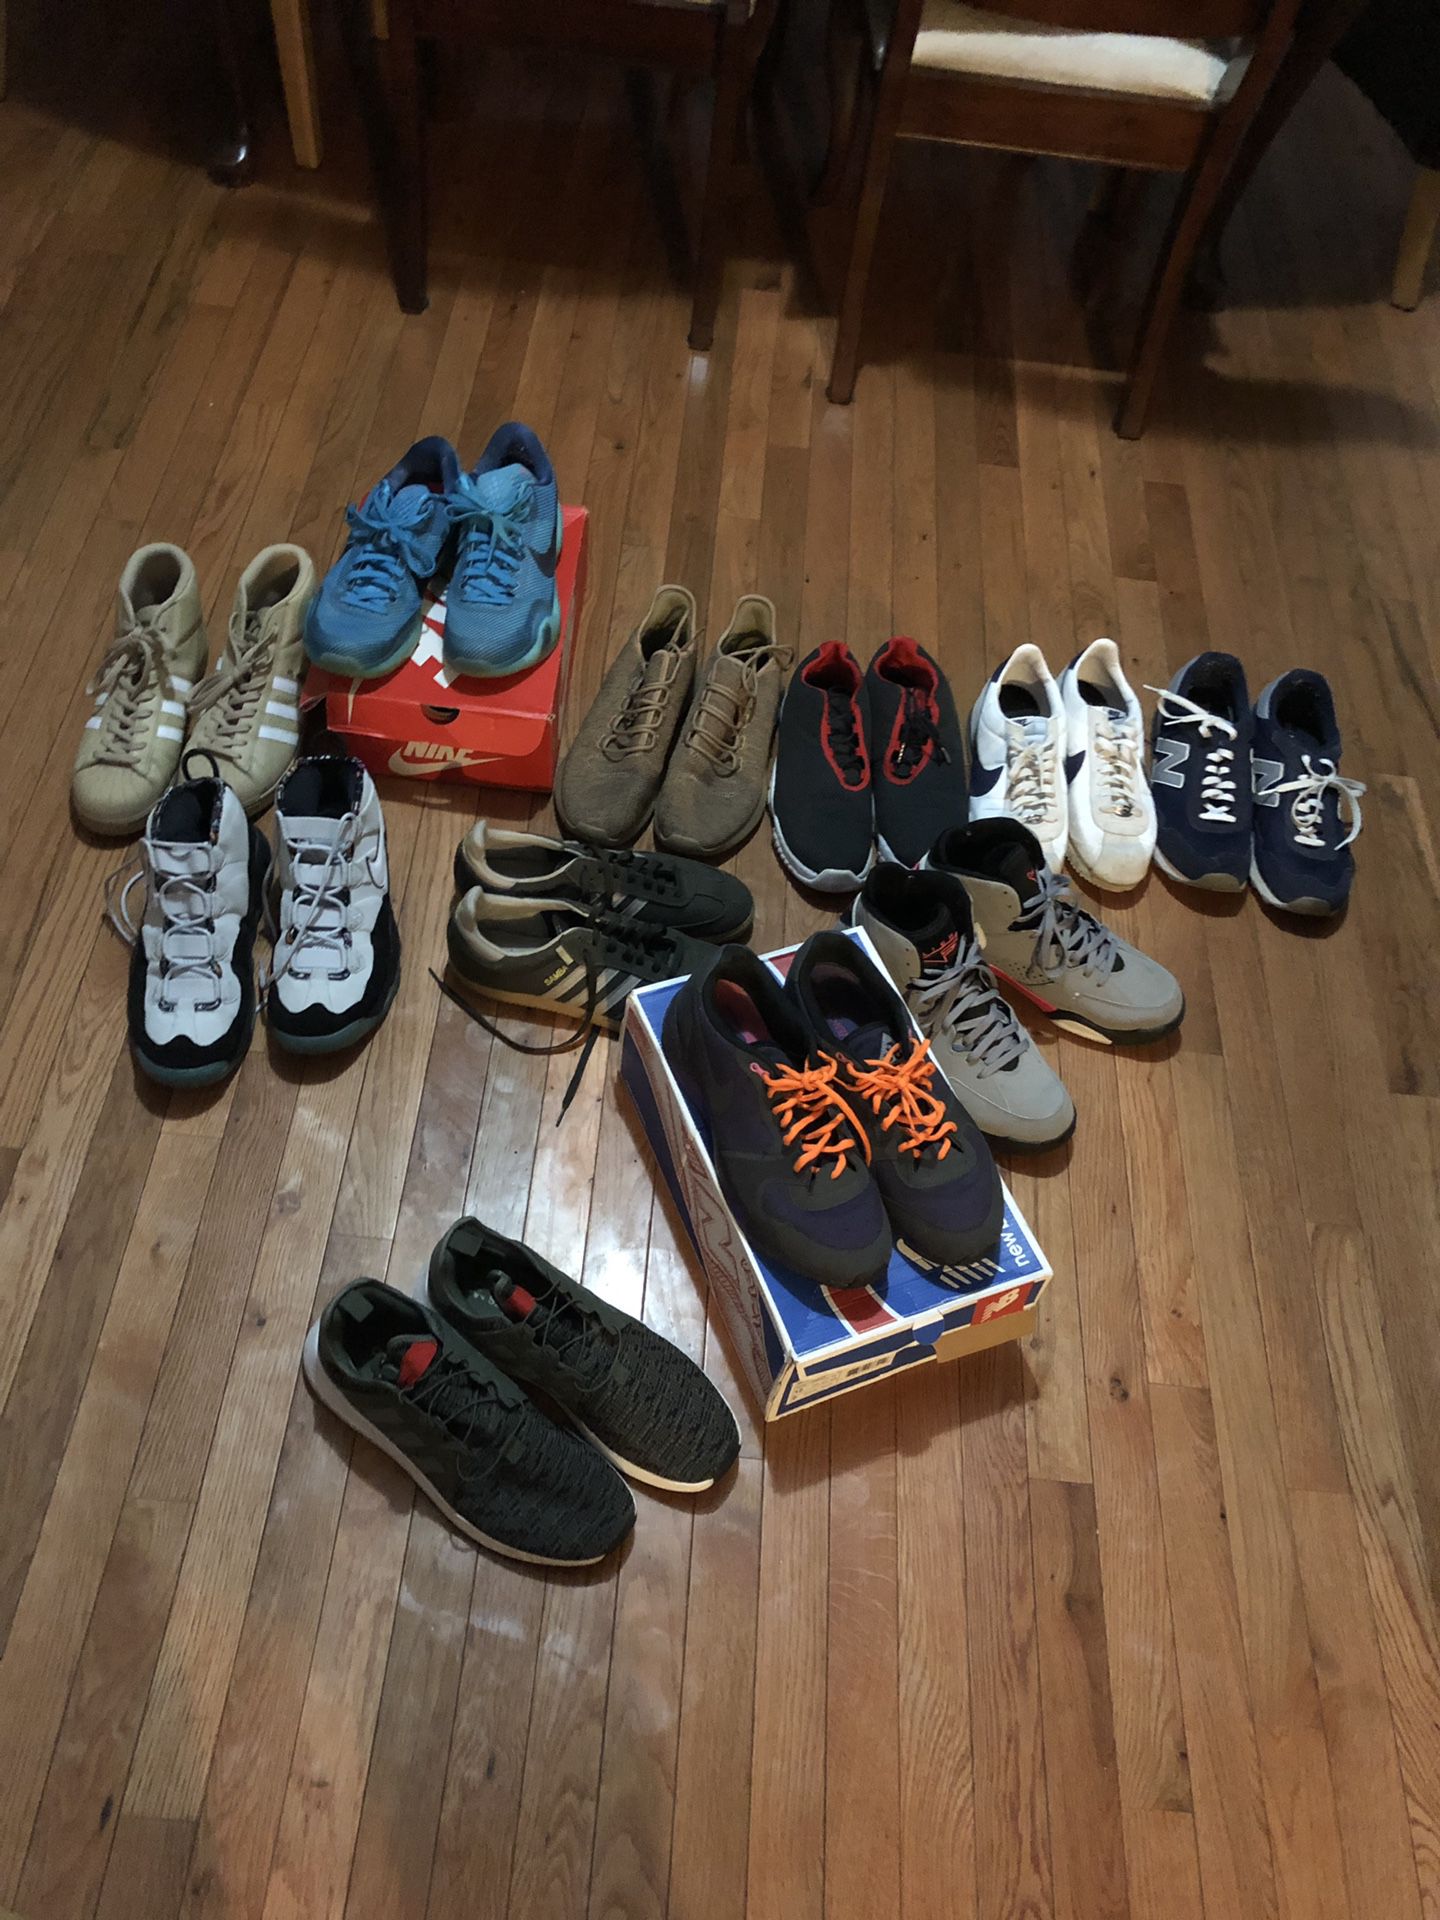 Jordan’s, Kobe’s, new balance, adidas, size 12